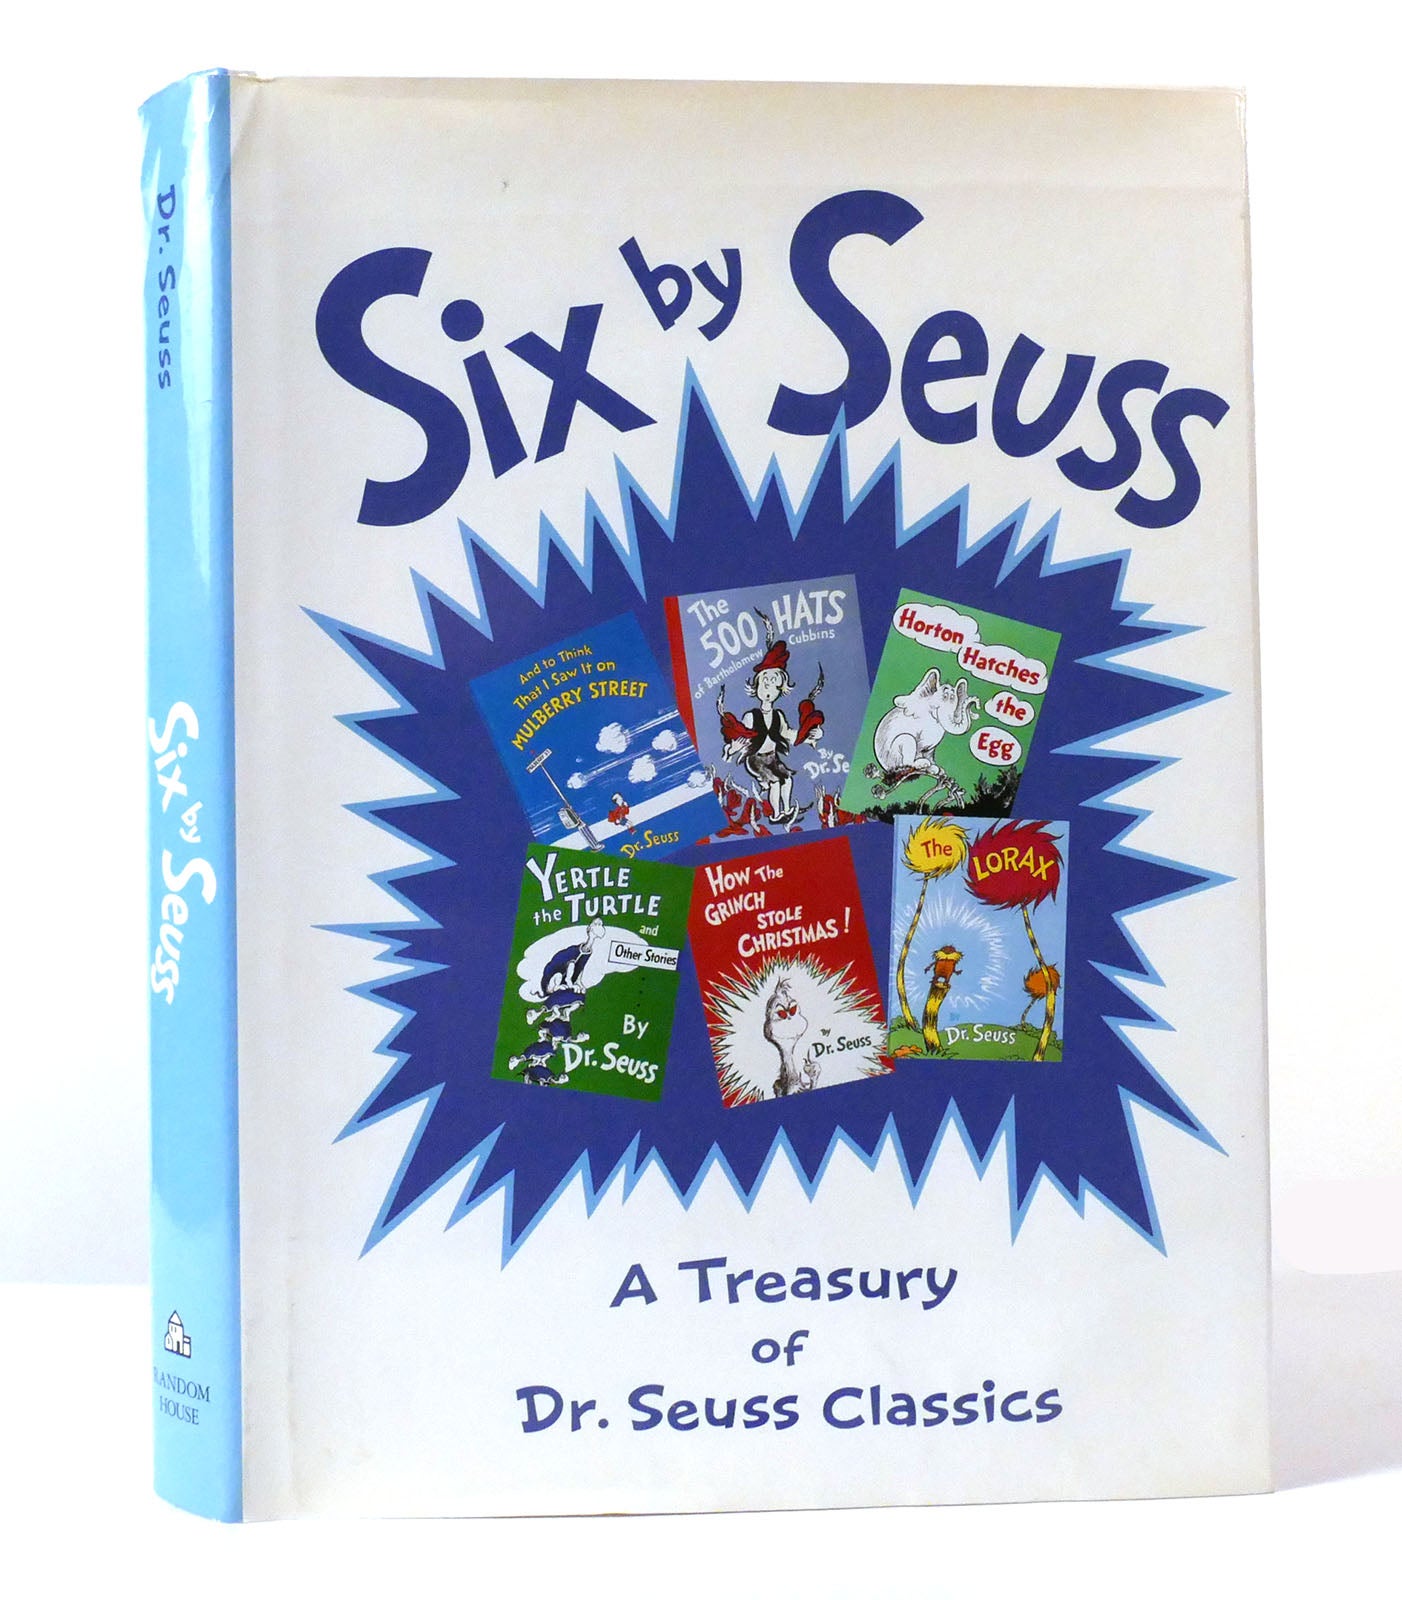 SIX BY SEUSS A Treasury of Dr. Seuss Classics | Dr. Seuss | First